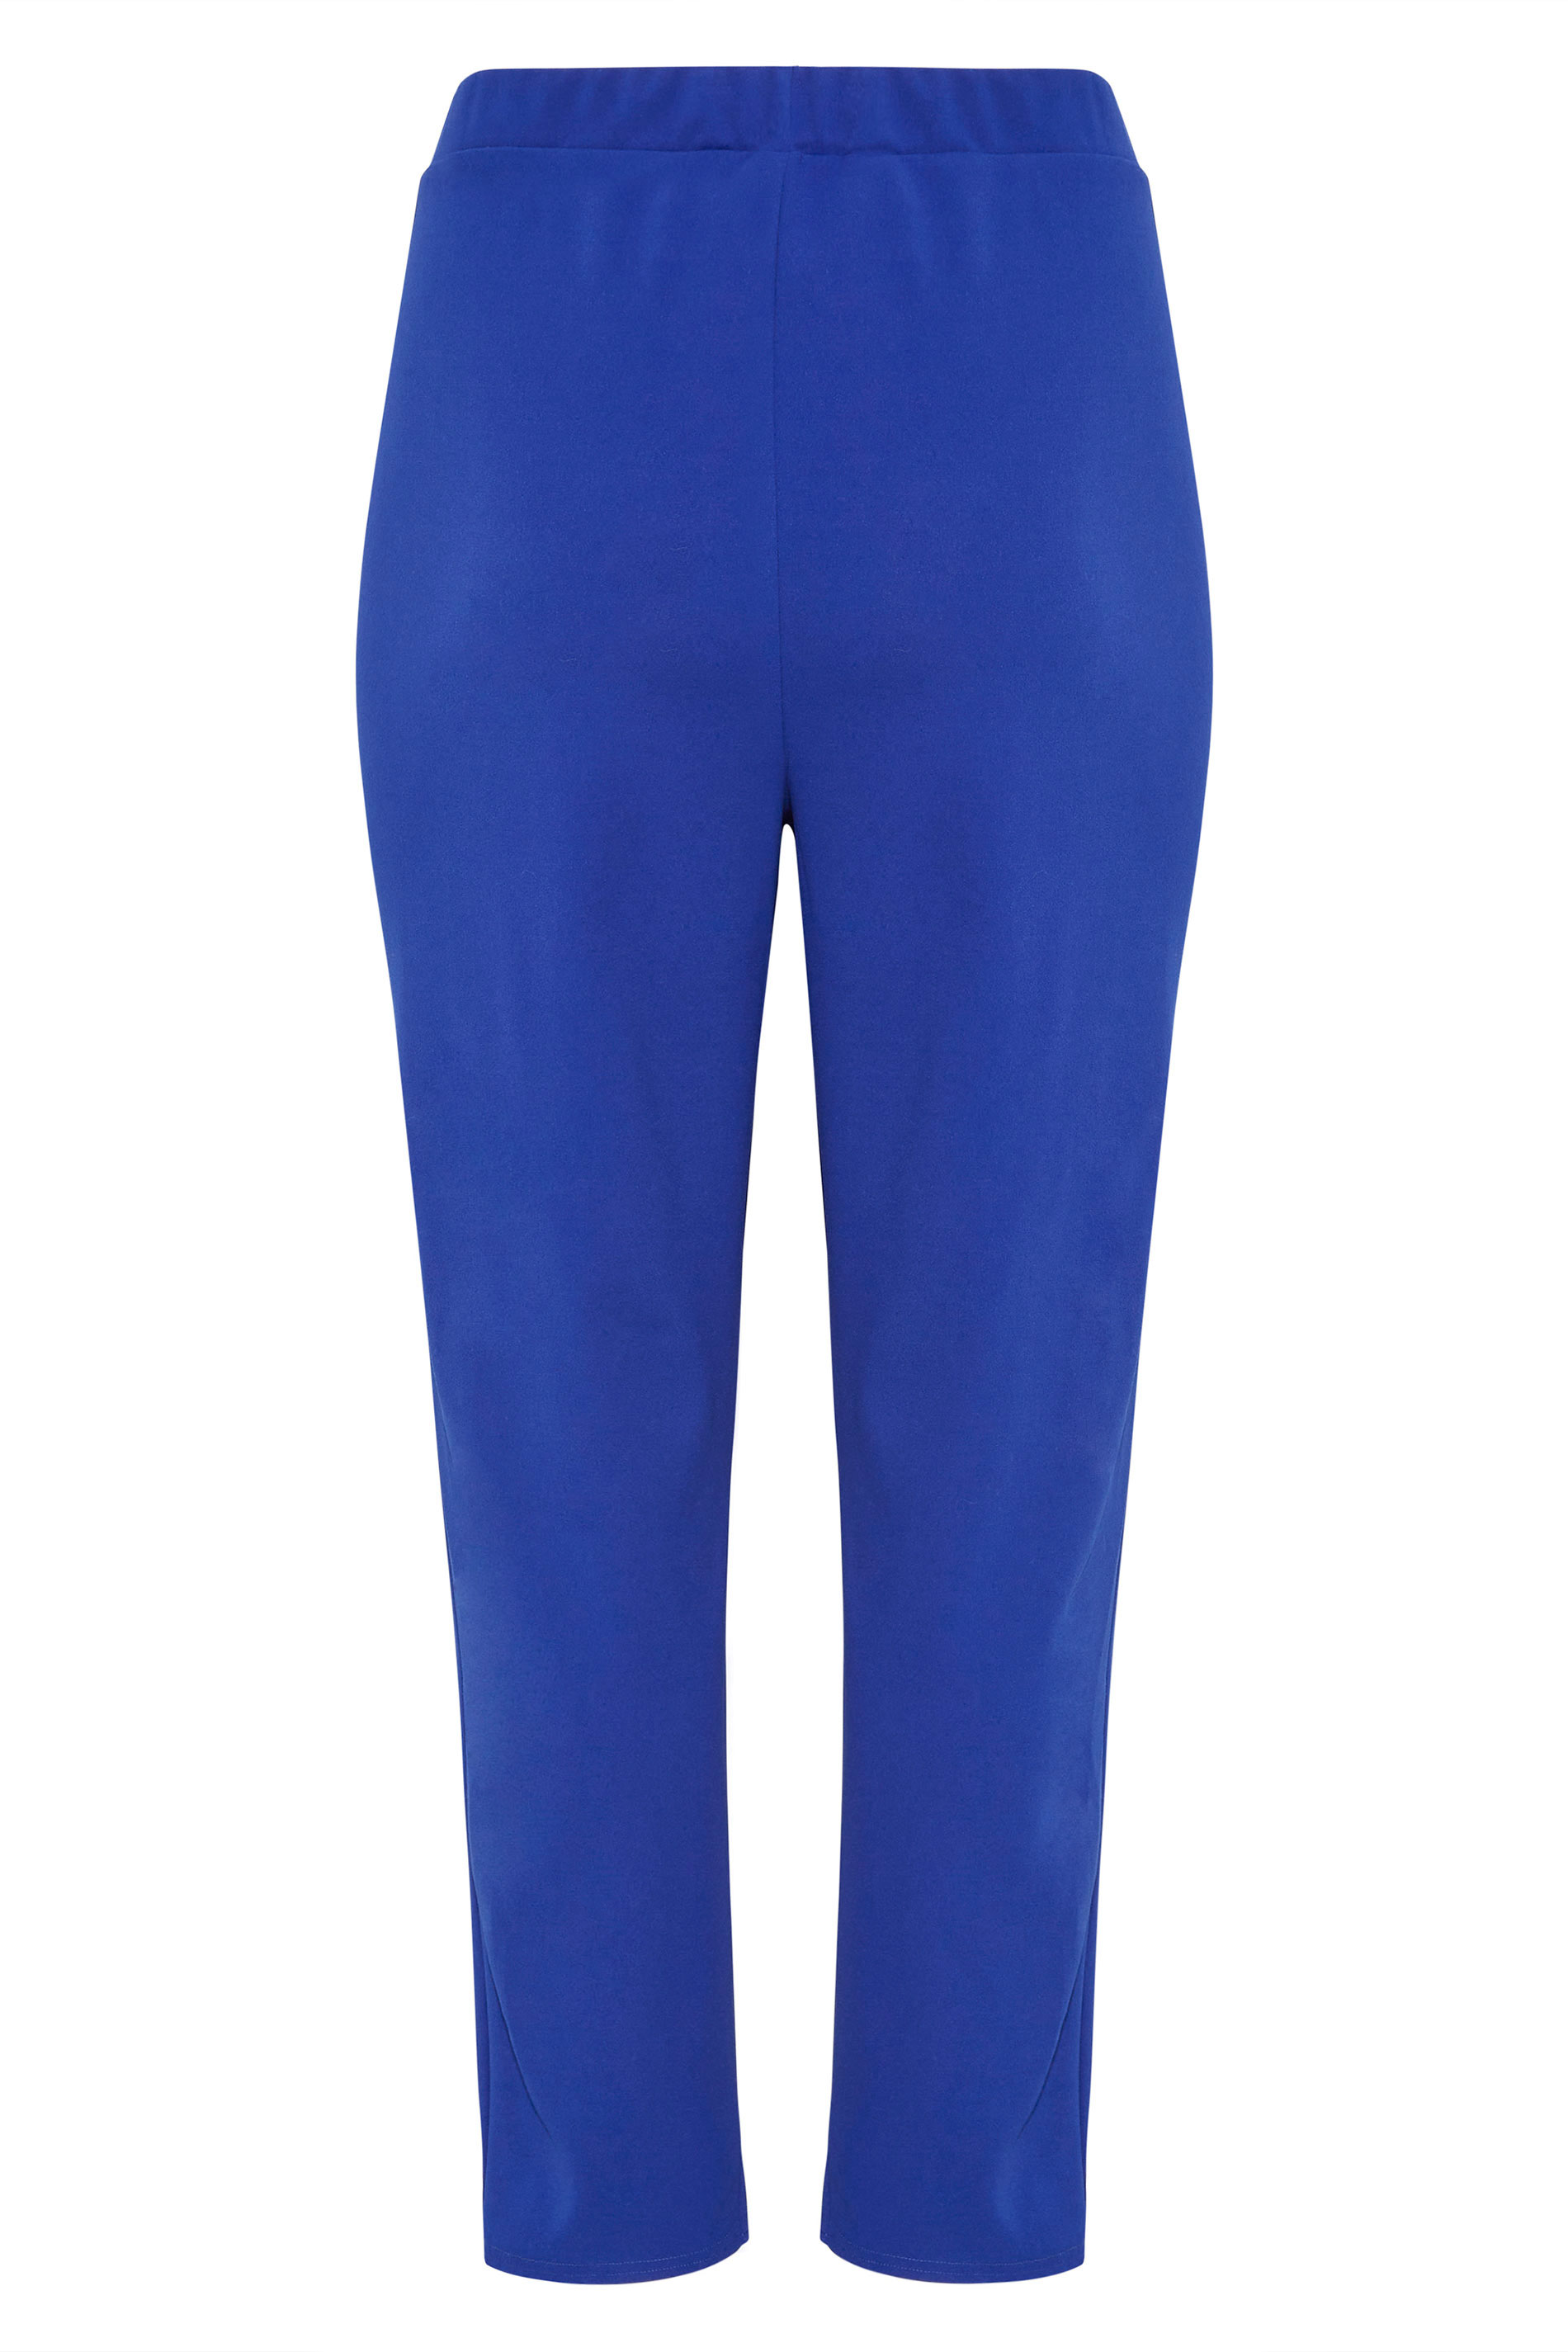 VERO MODA Regular Fit Women Blue Trousers - Buy VERO MODA Regular Fit Women  Blue Trousers Online at Best Prices in India | Flipkart.com